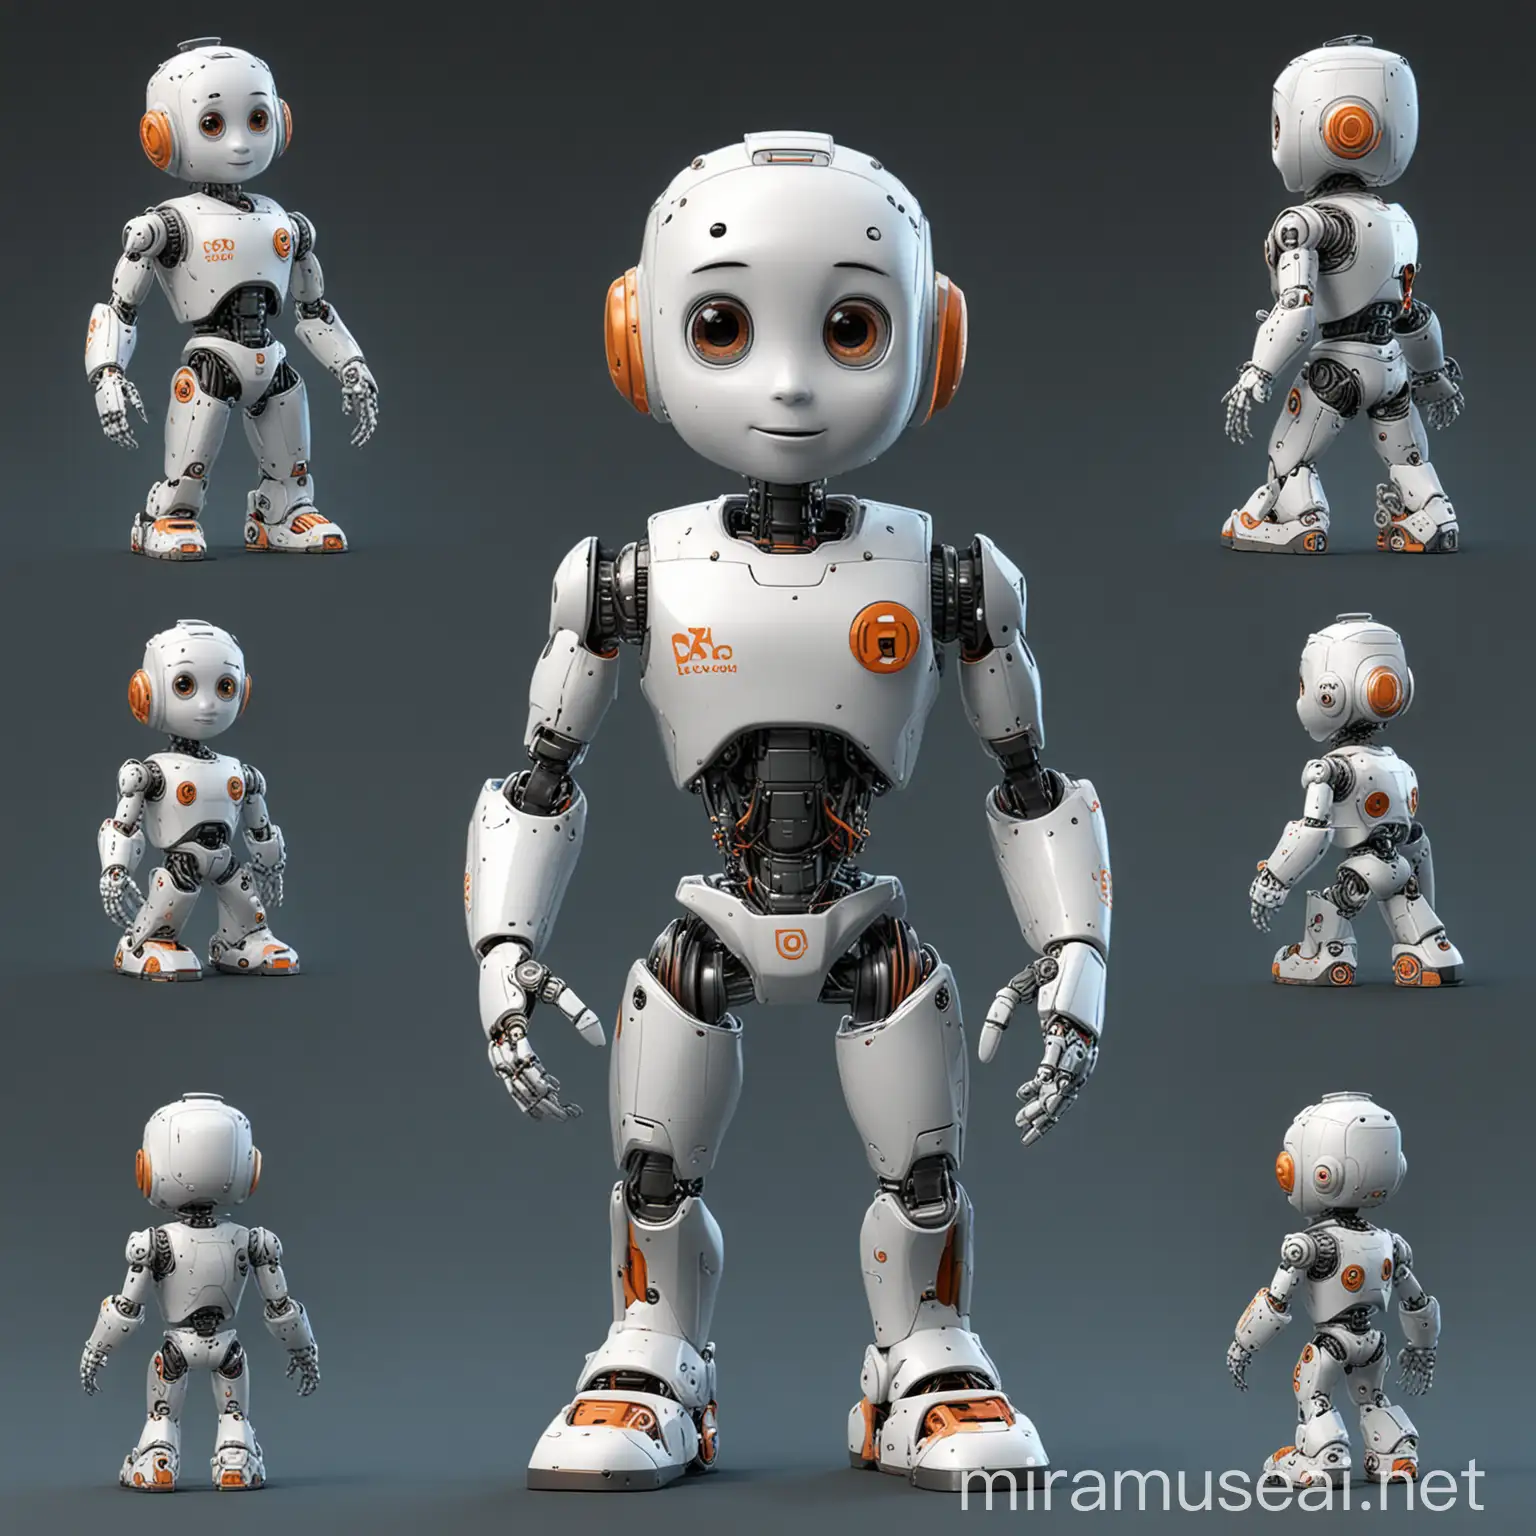 Koddi AI Robot Cute 3D Pixar Style Programming Instructor